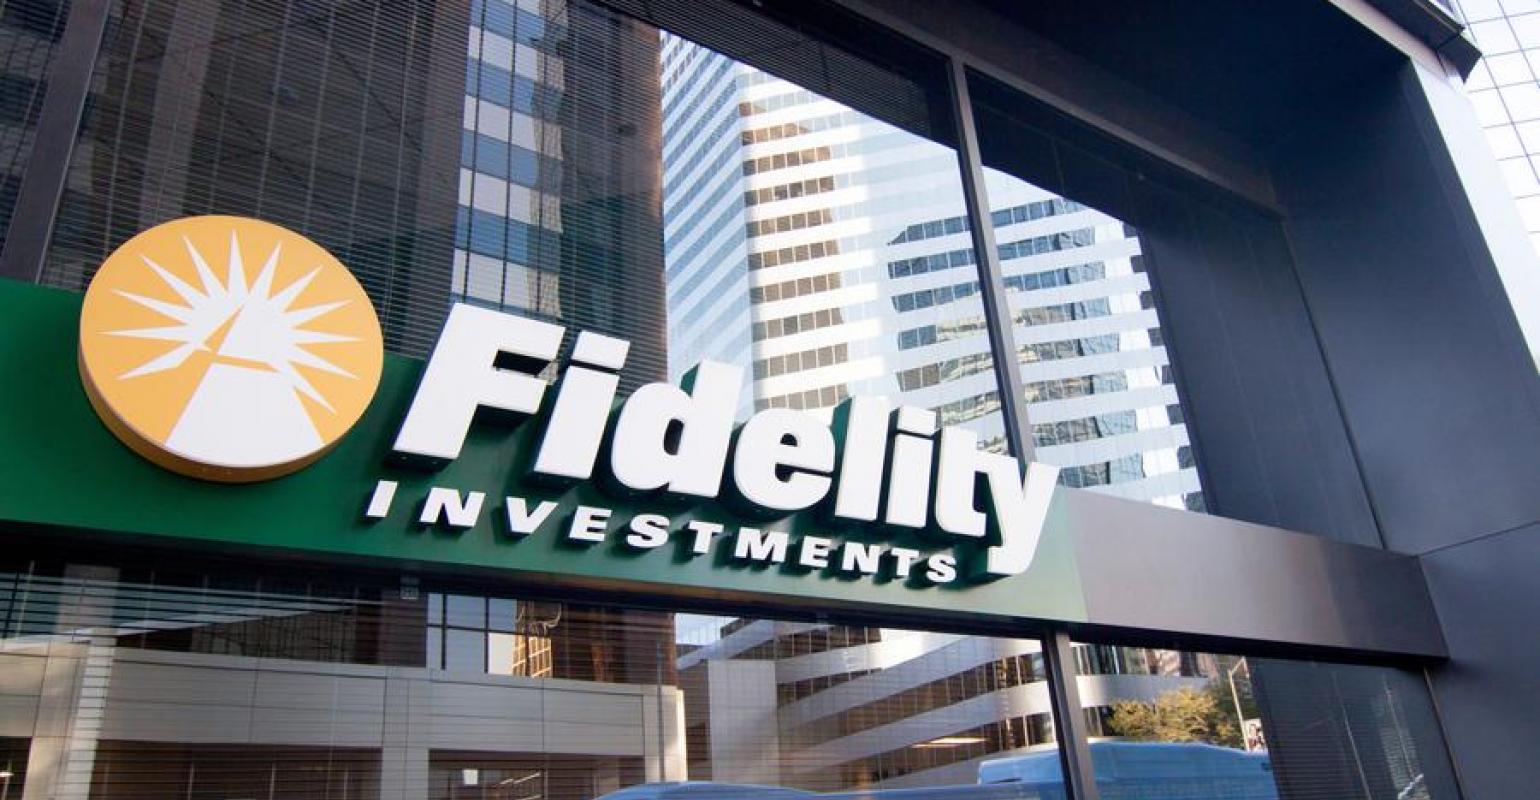 Fidelity Investment